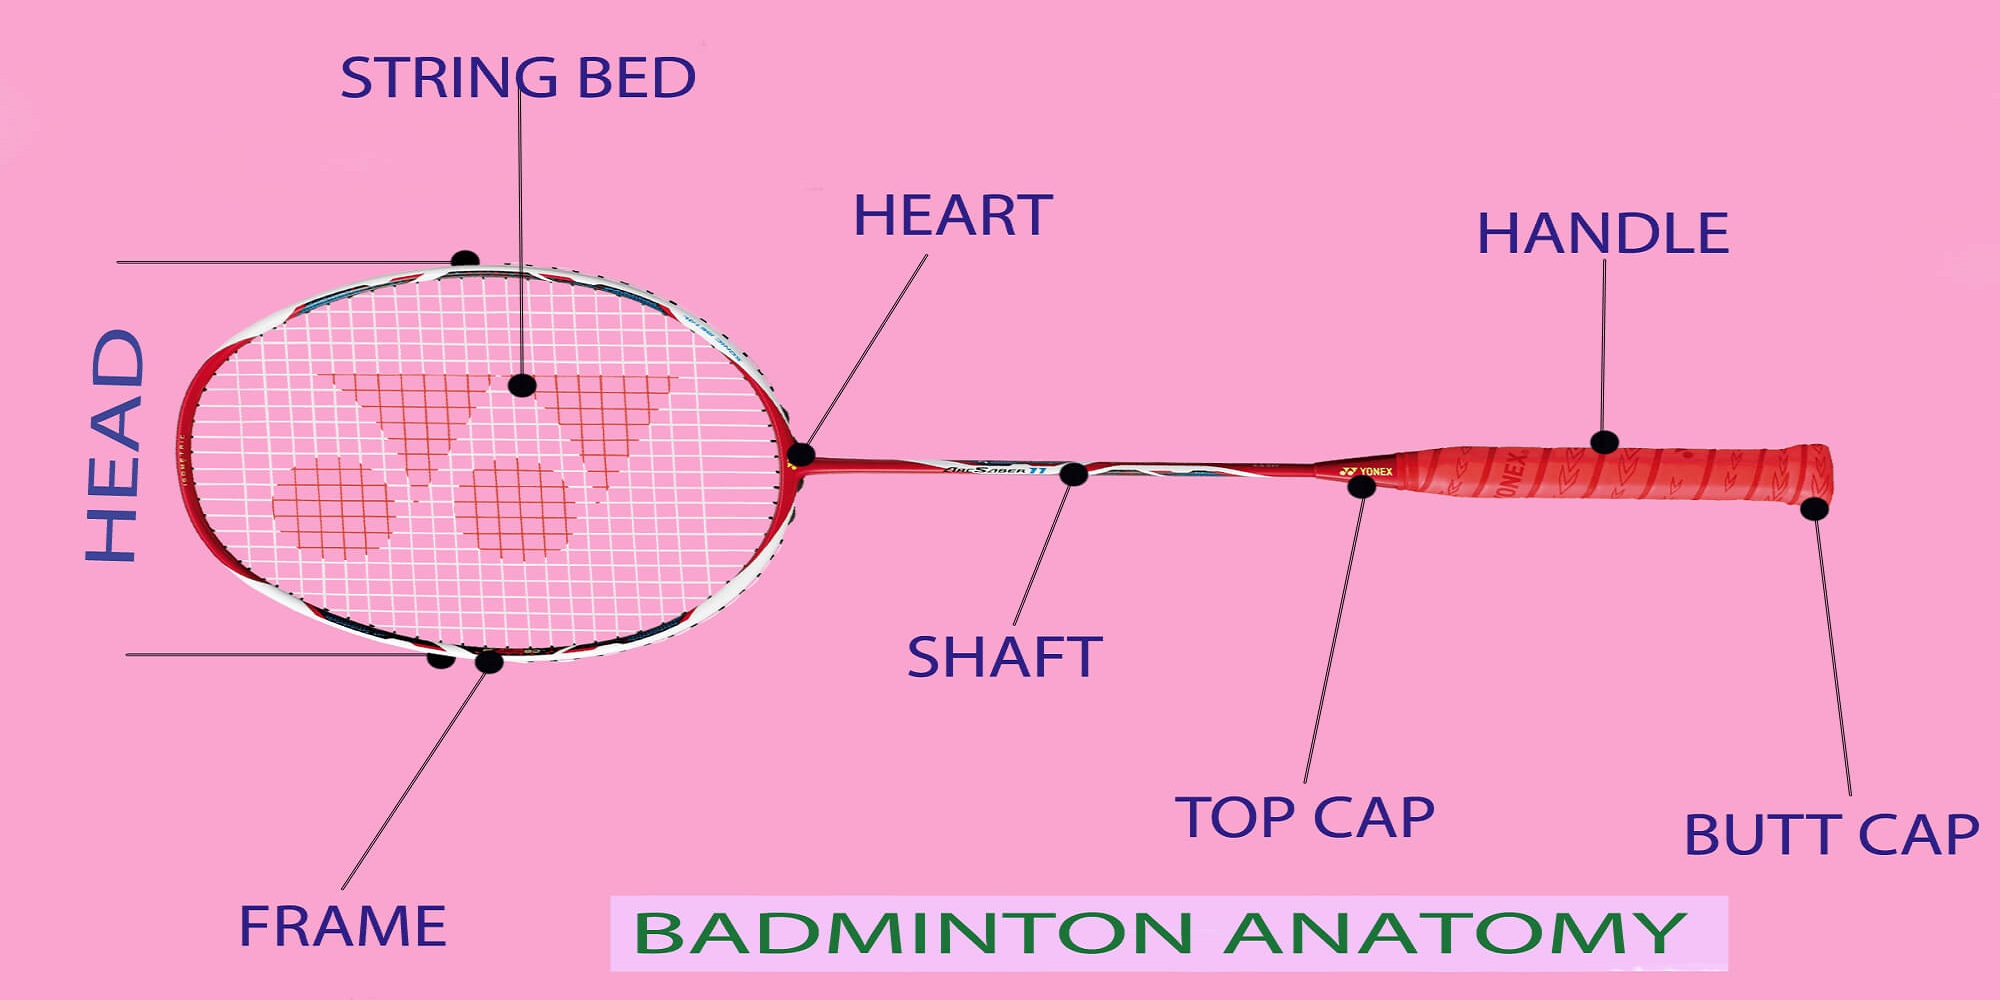 badminton-racket-anatomy-kheladda